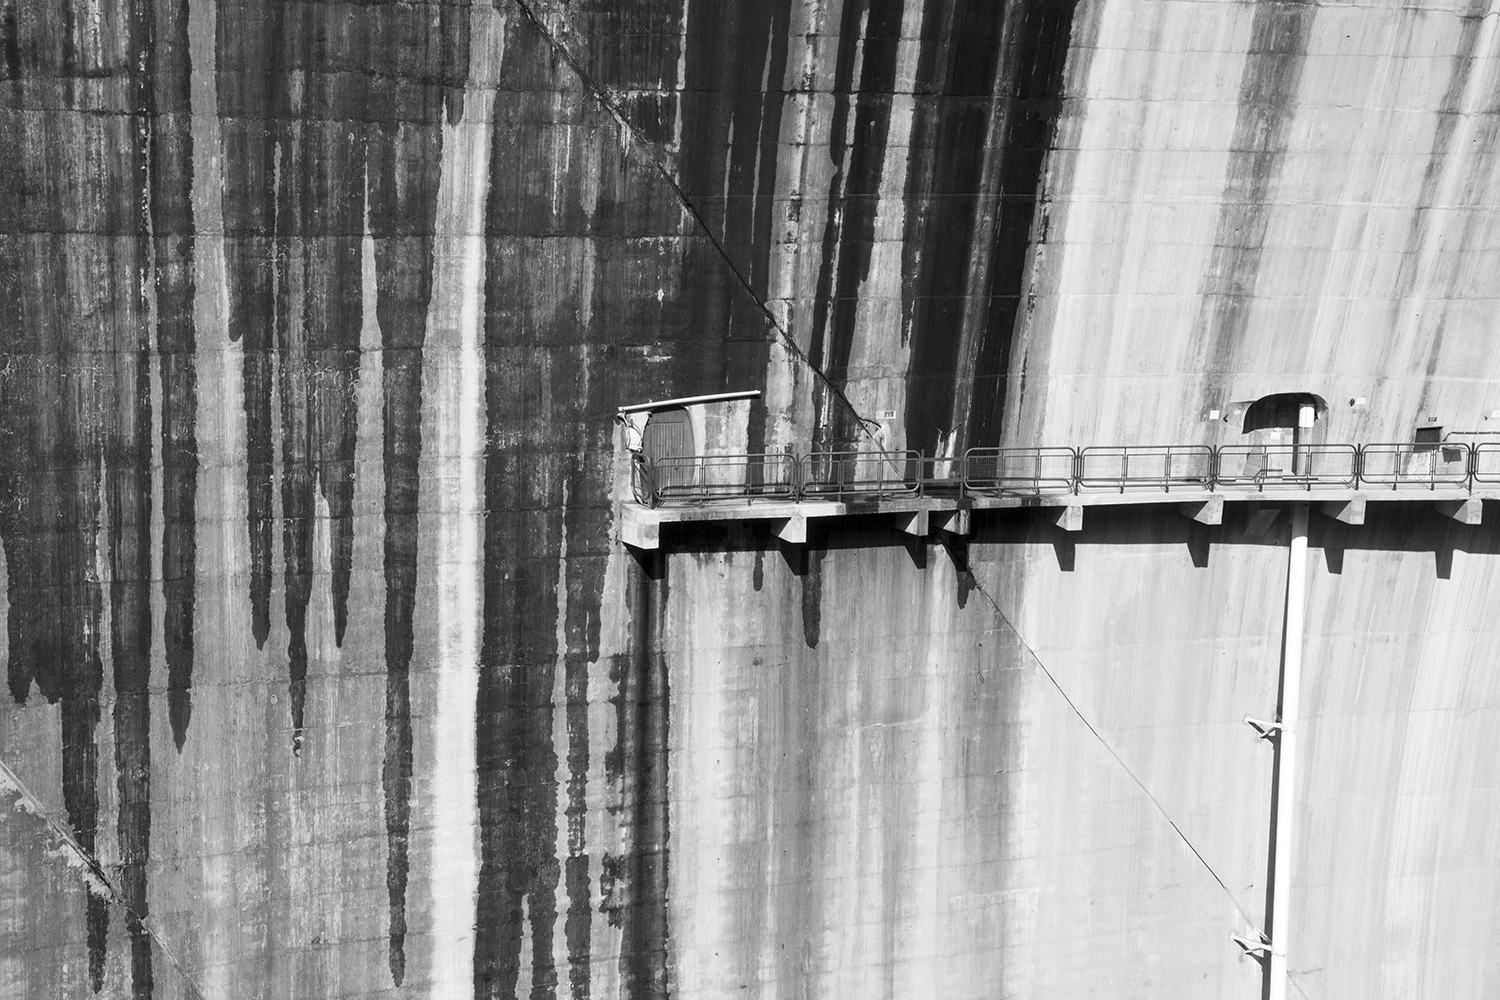 carina martins, hub-structures - fotografia a preto e branco de parede de barragem com manchas de humidad